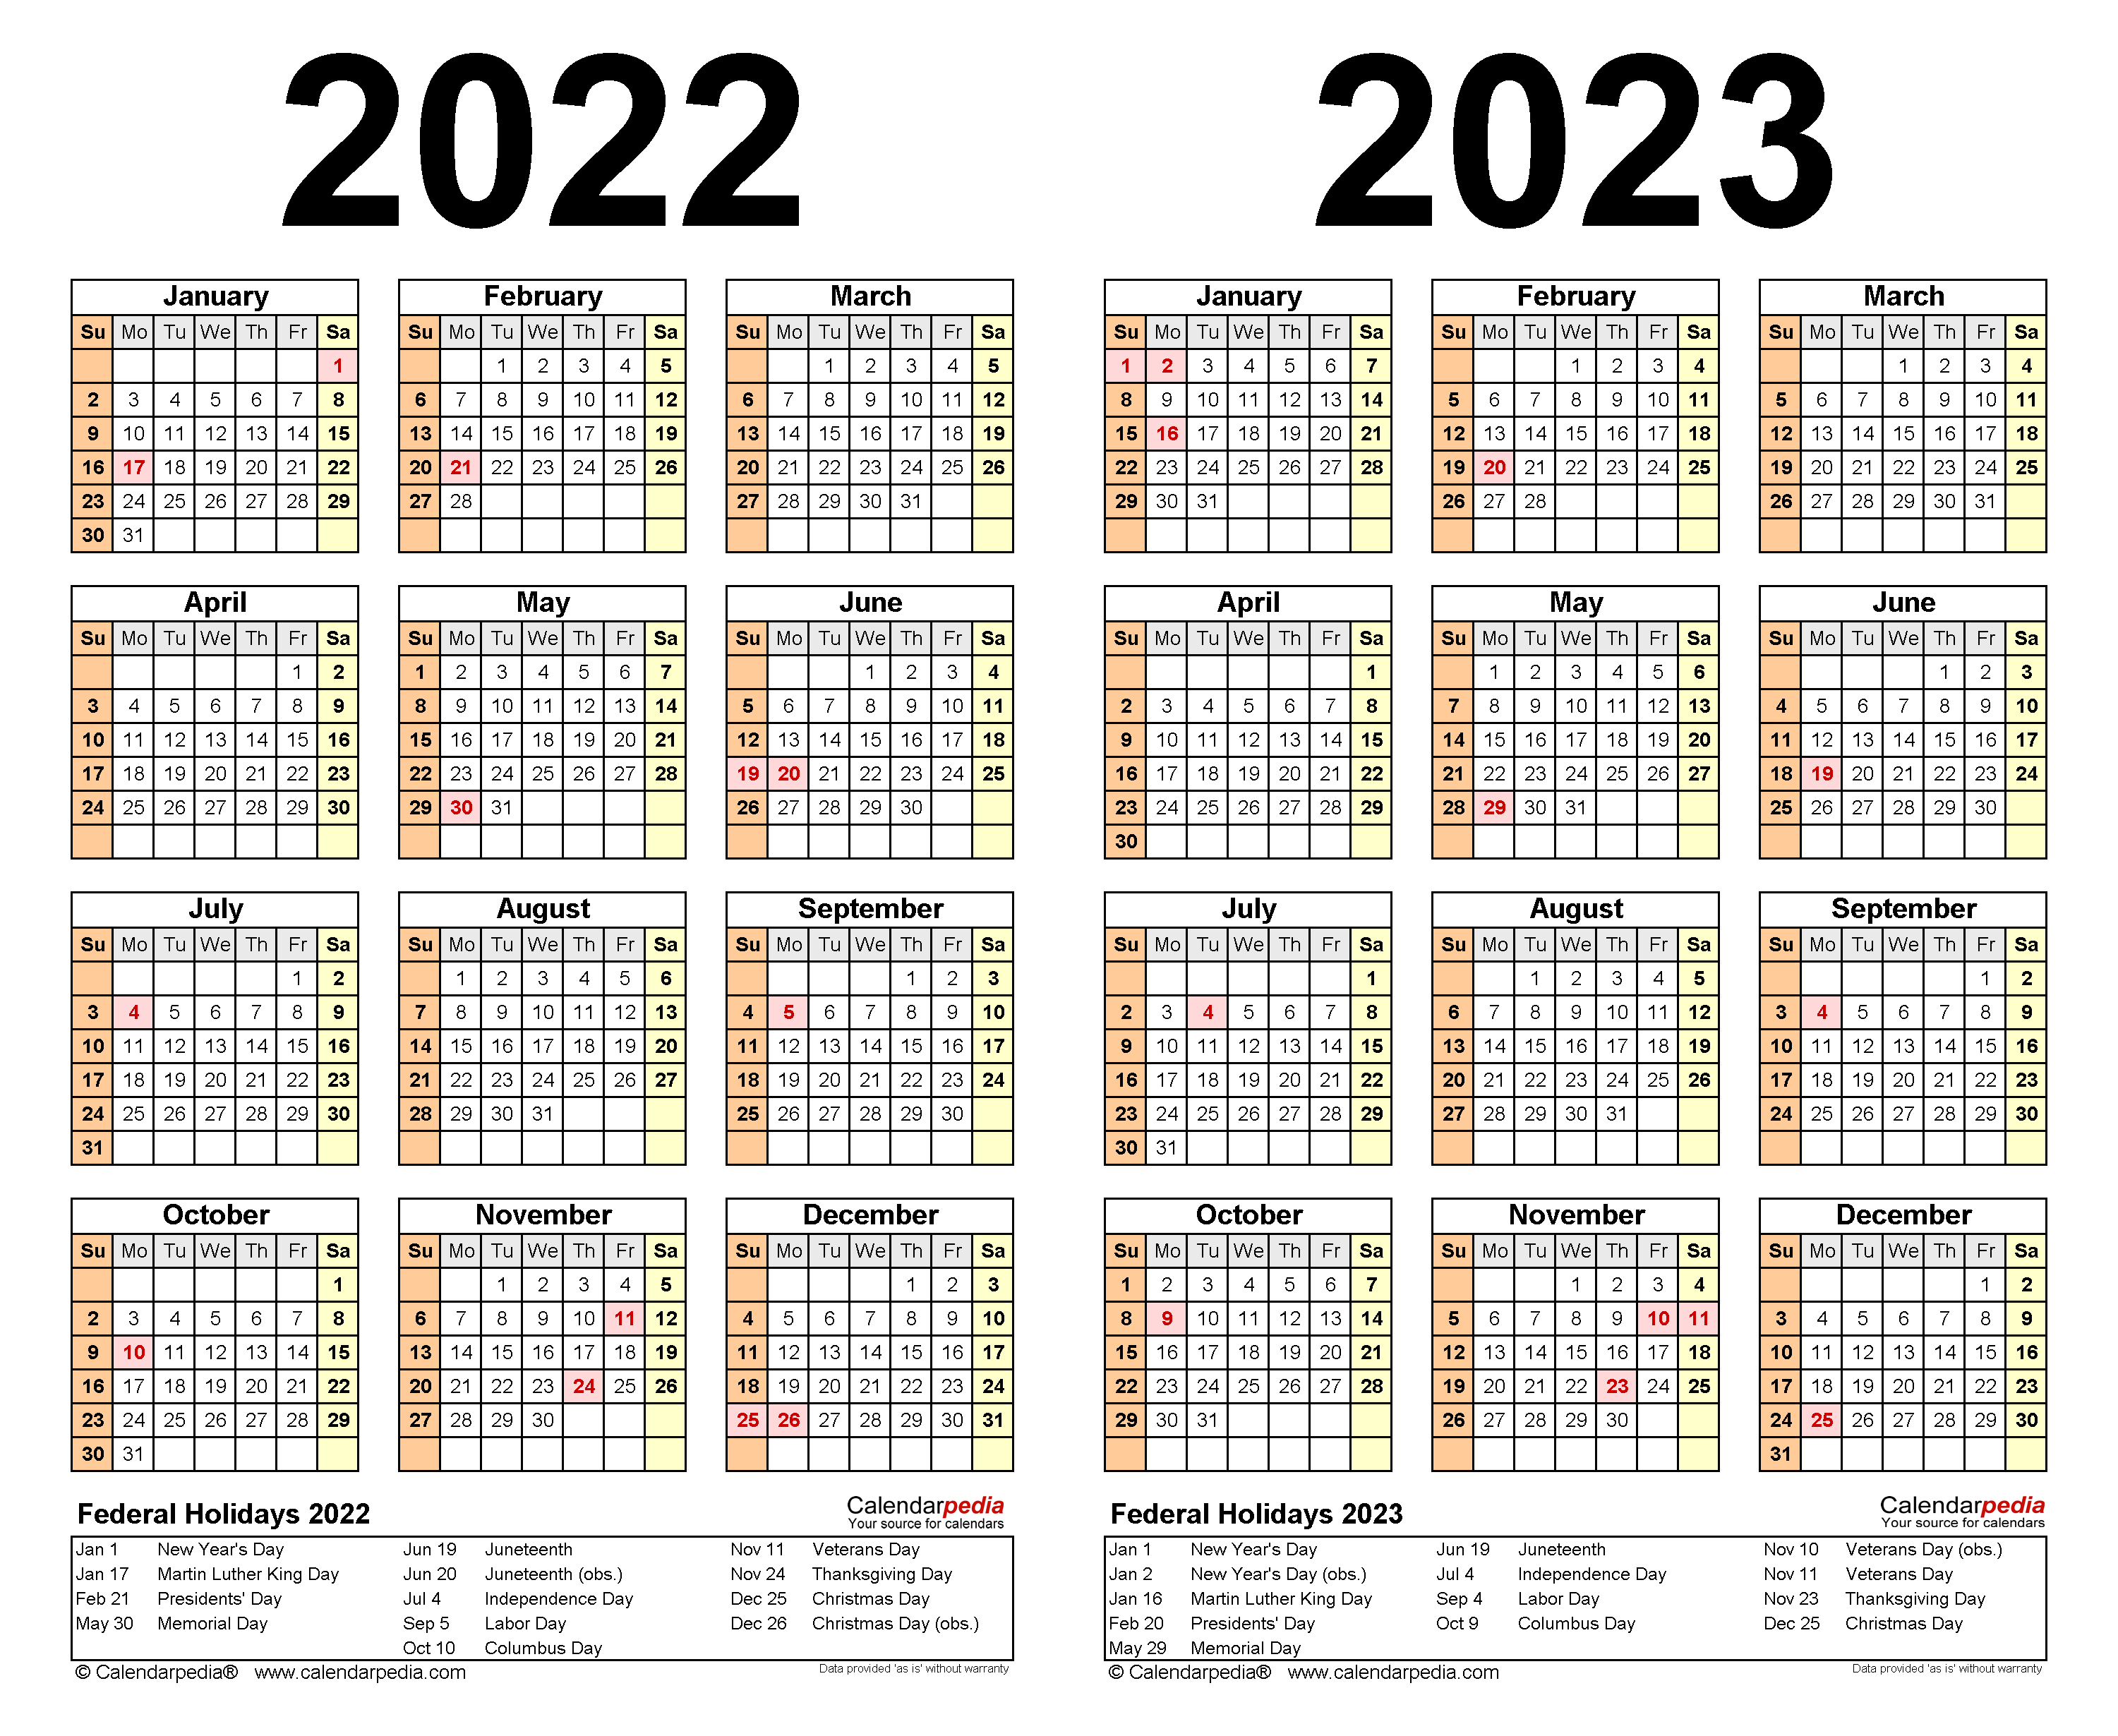 Academic Calendar Template 2022 2023 Universitycalendars net